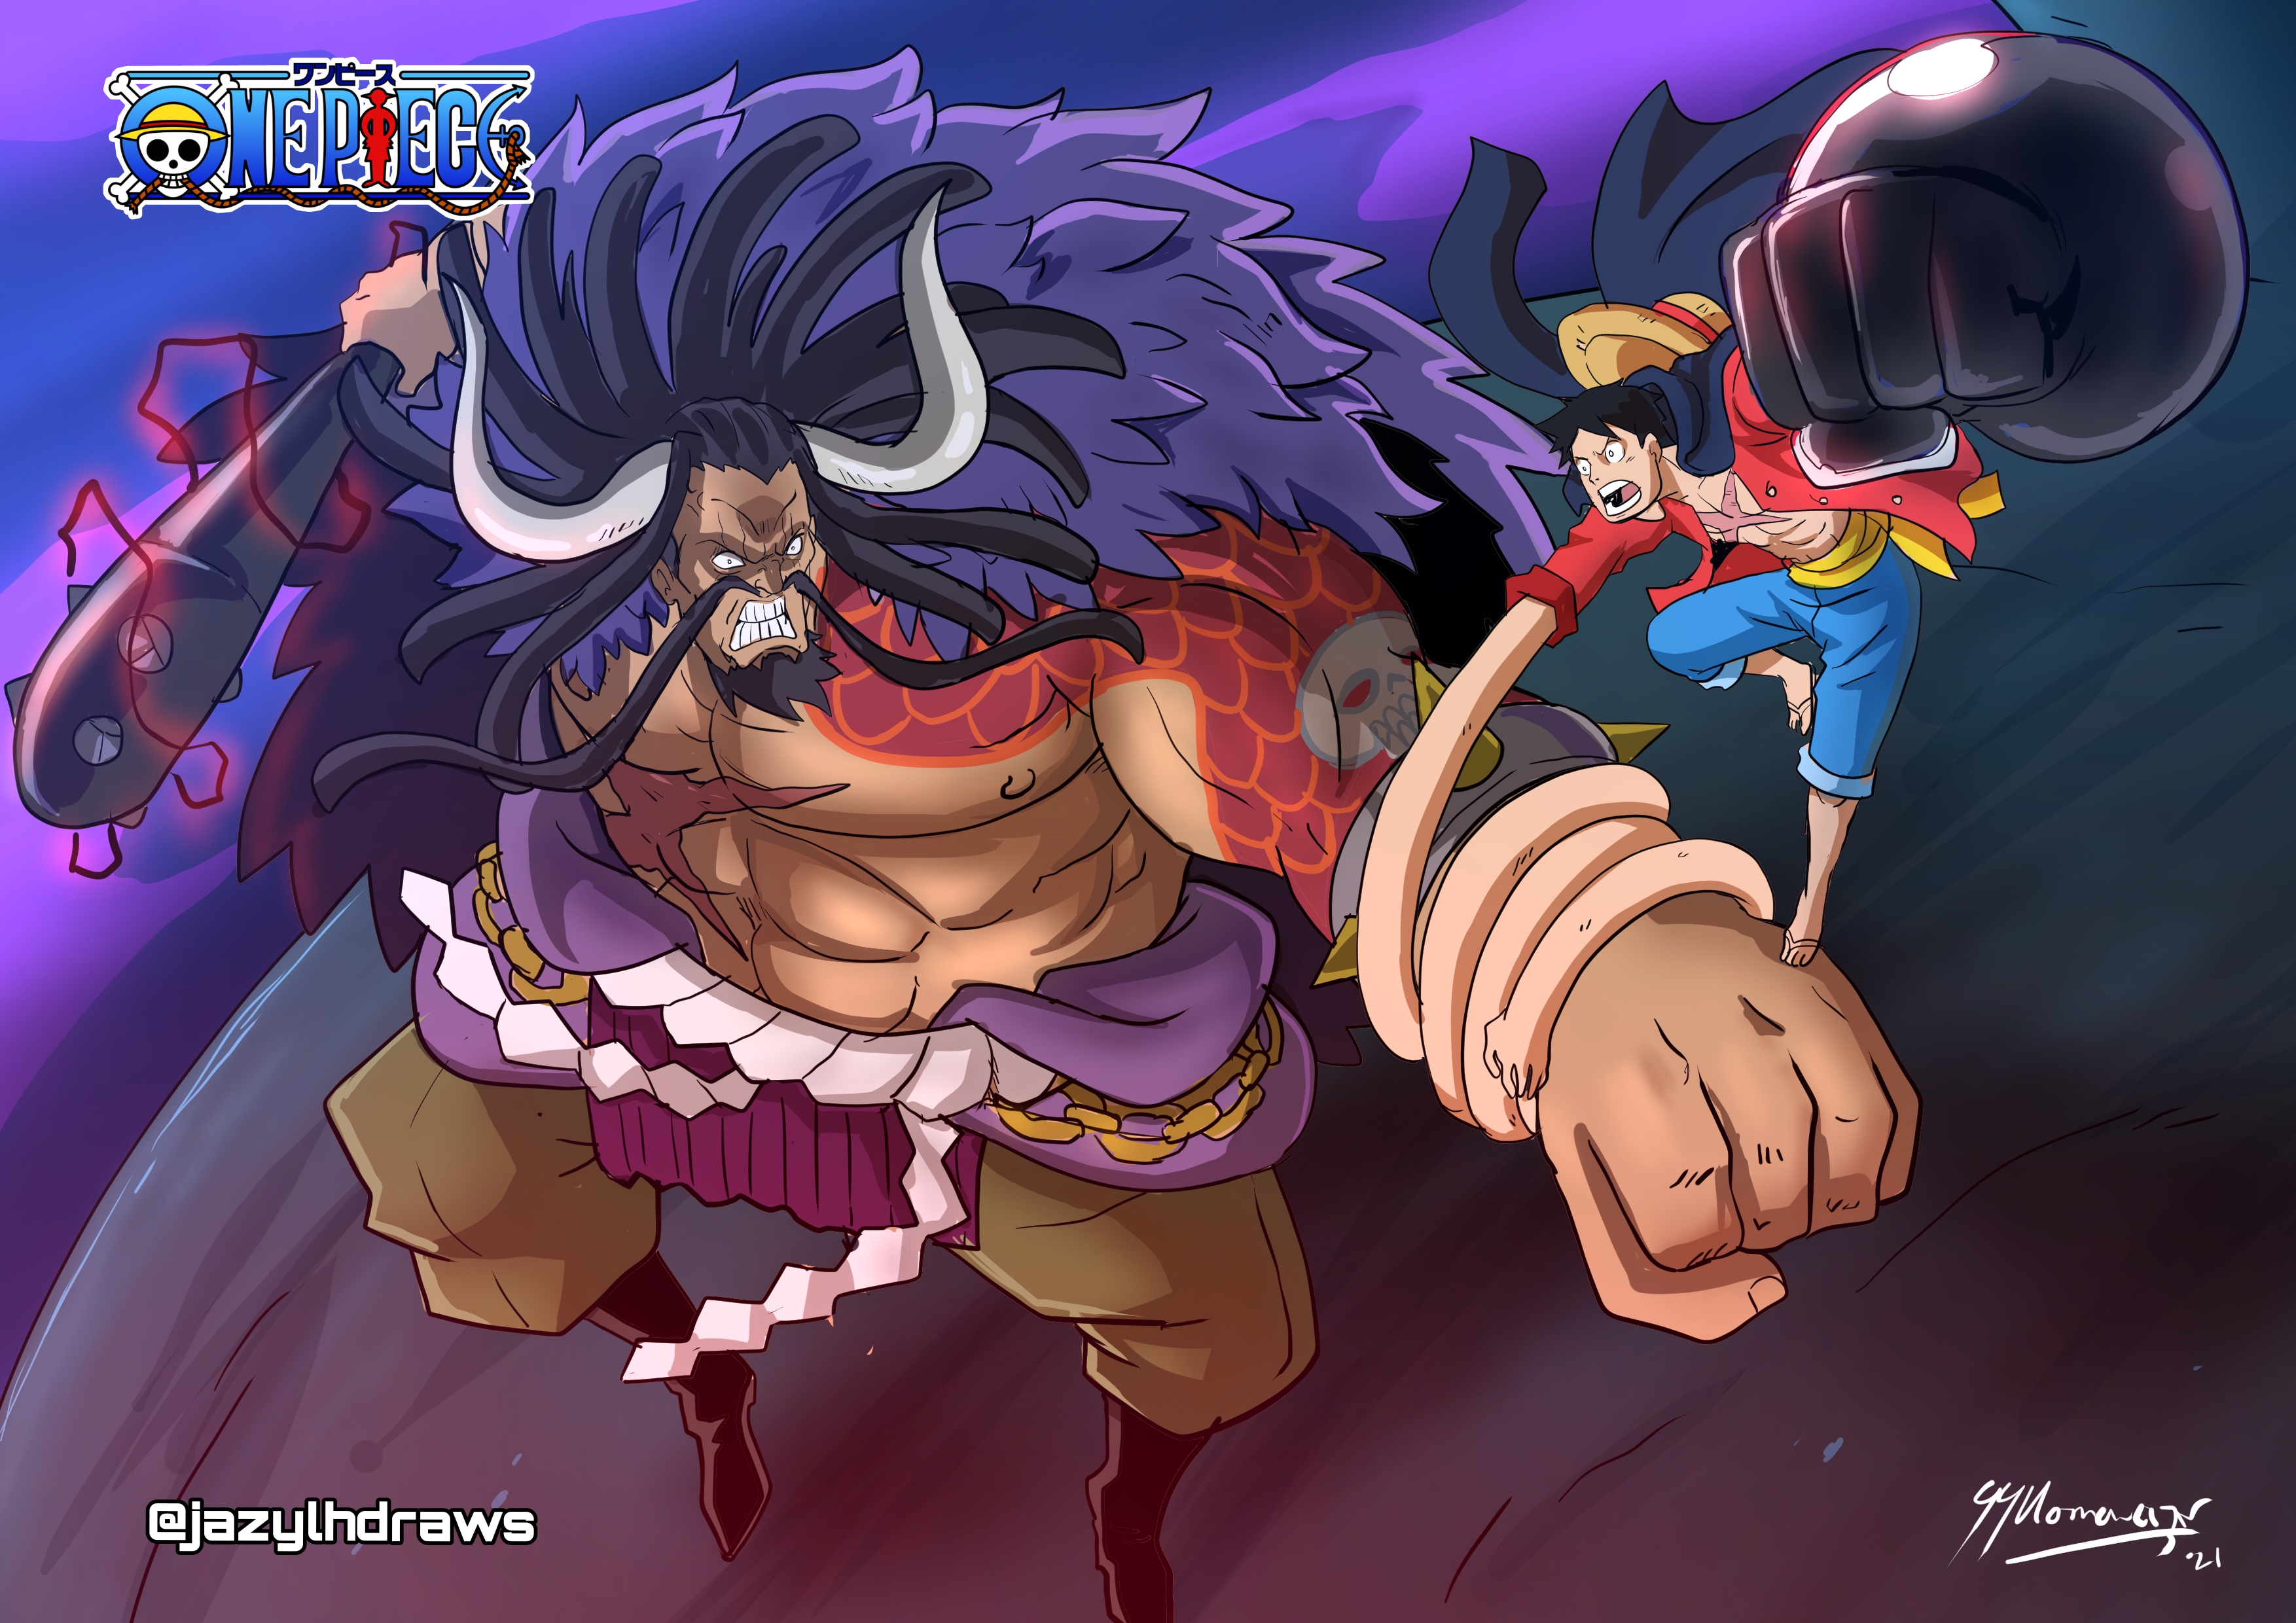 Luffy vs kaidou, one piece 1037 by EustassQ on DeviantArt